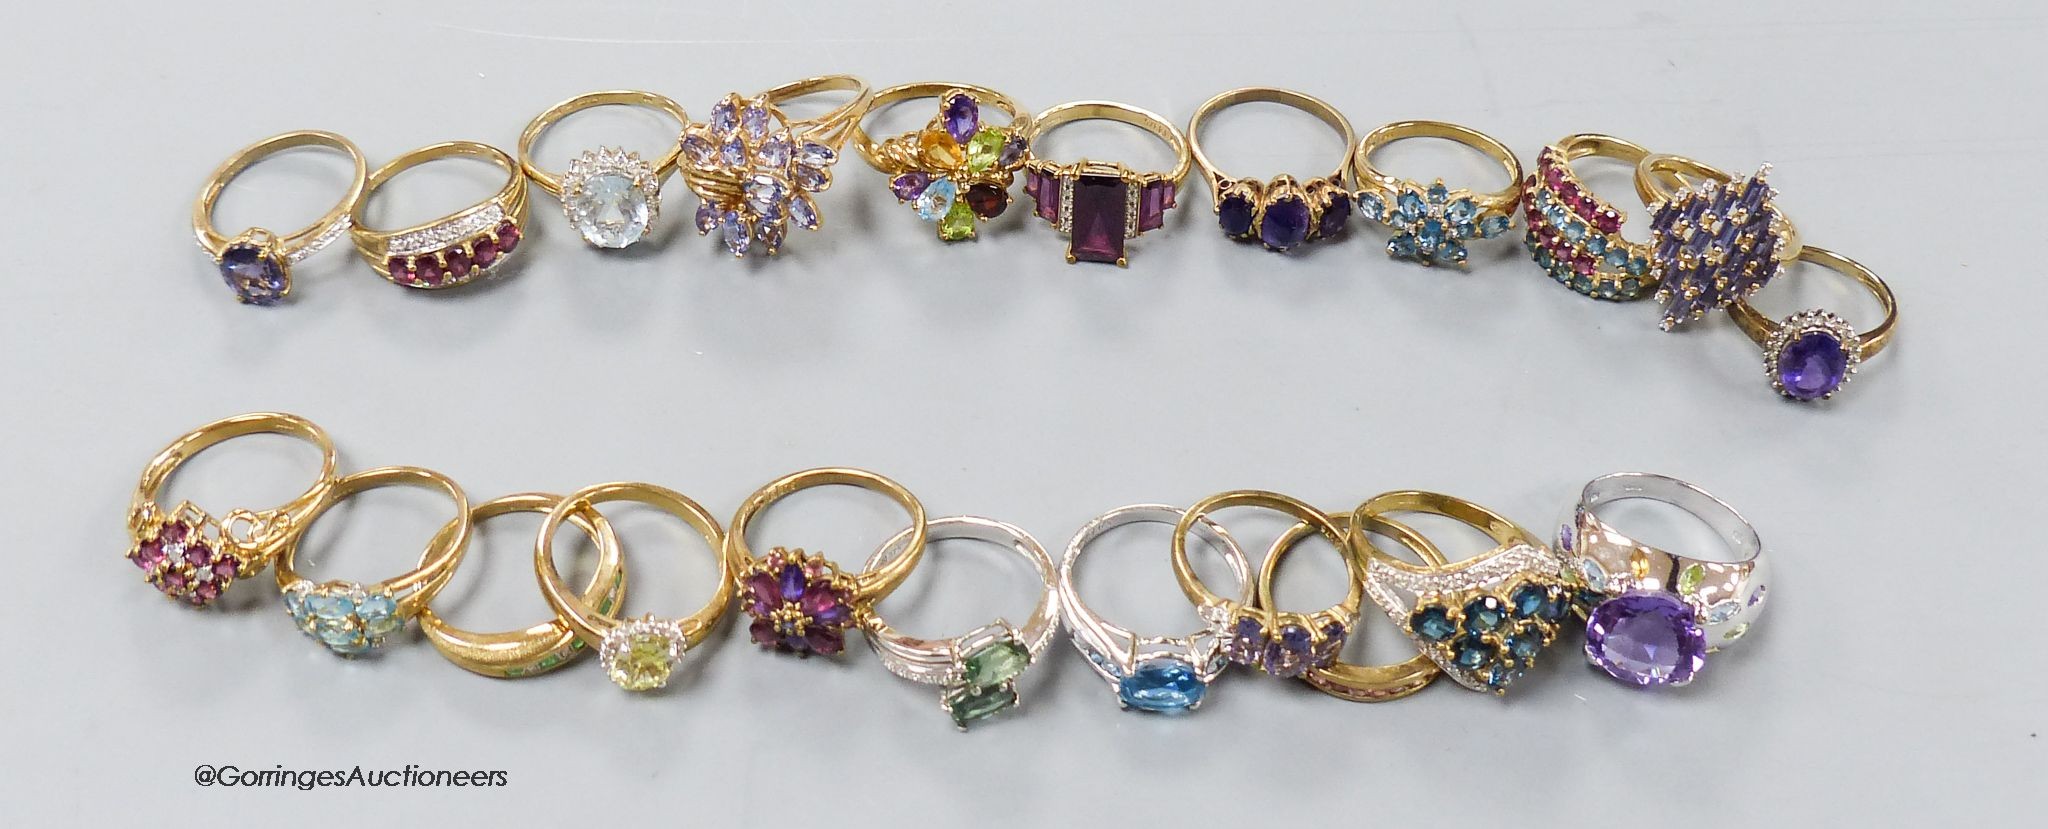 Twenty two assorted modern 9ct or 9k and gem set dress rings, gross 72.5 grams.